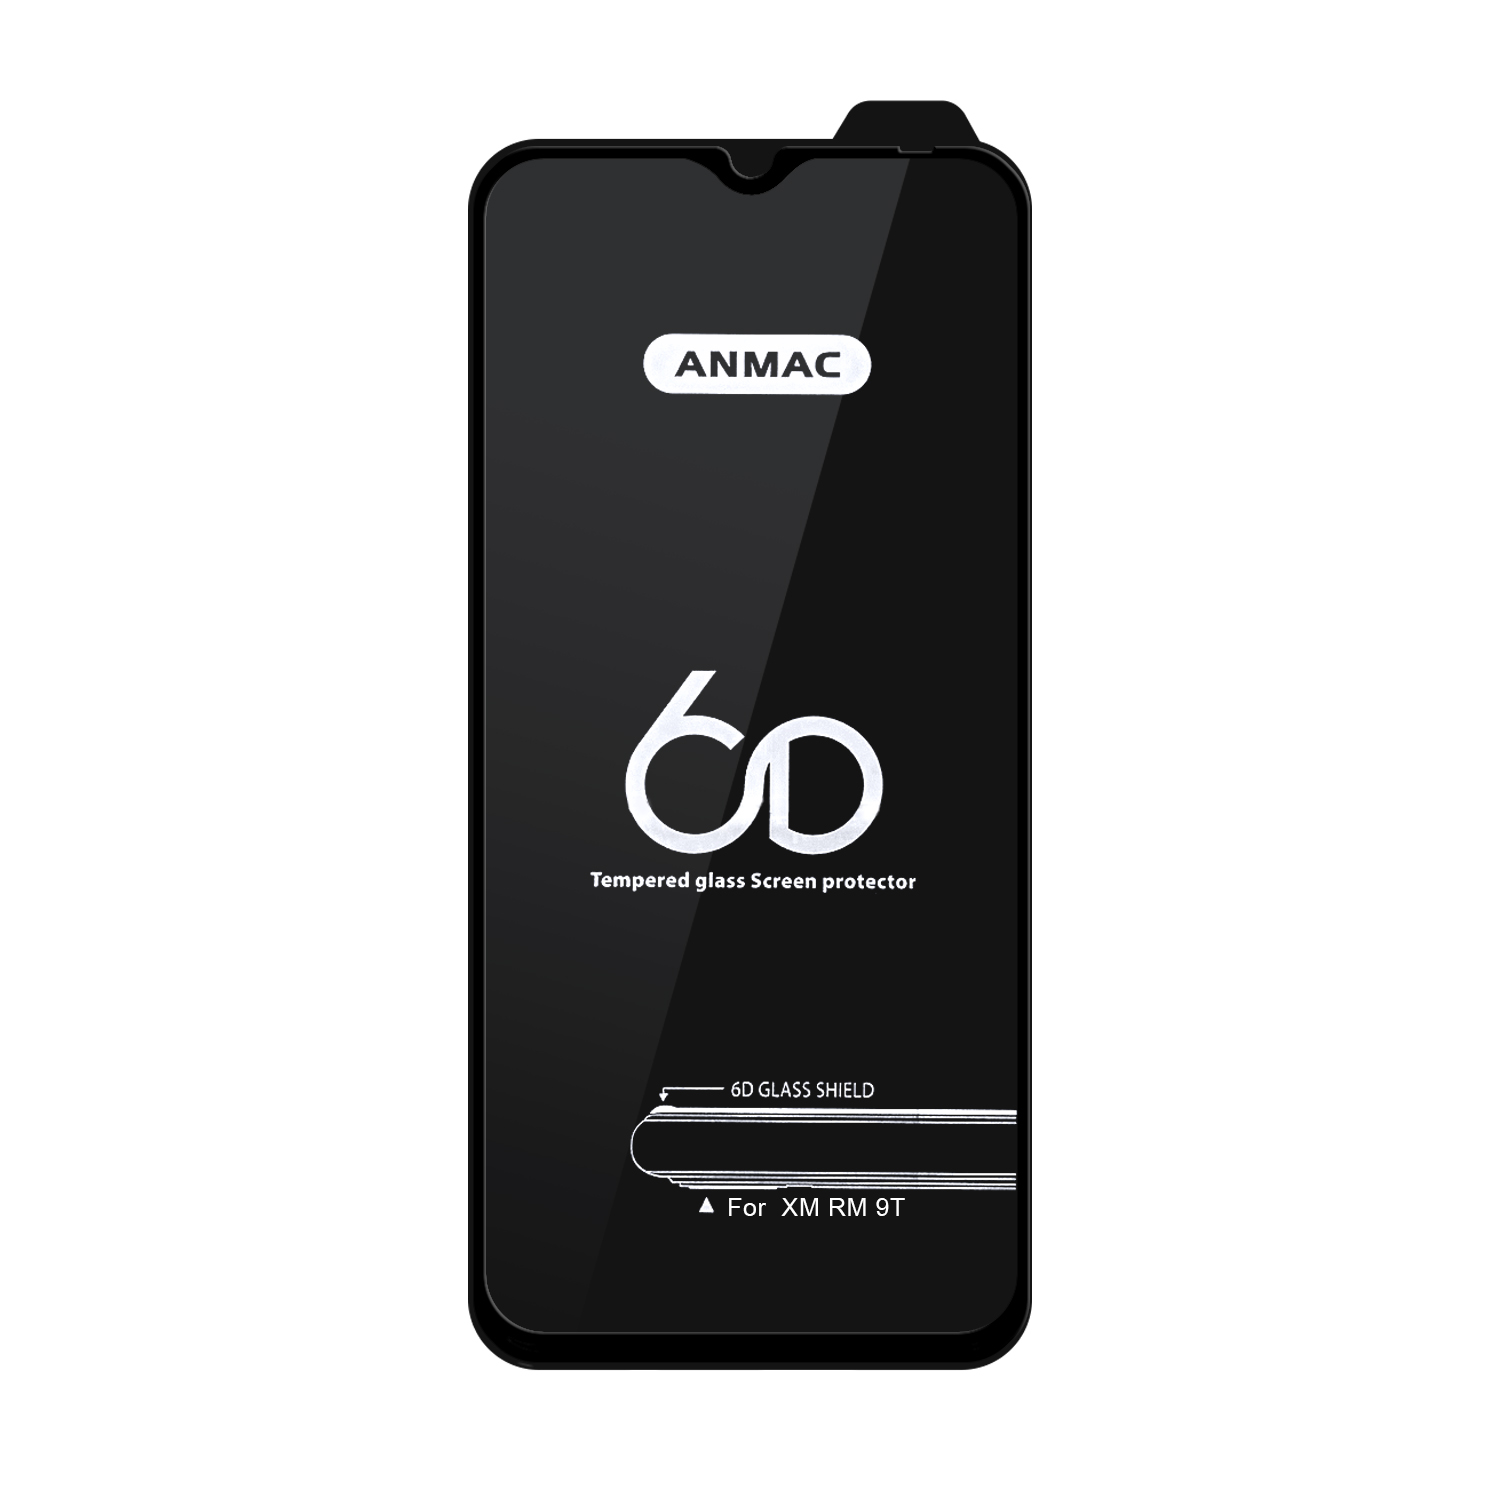 Защитное стекло XM Redmi 9T Anmac 6D Black без упаковки Арт.1137286